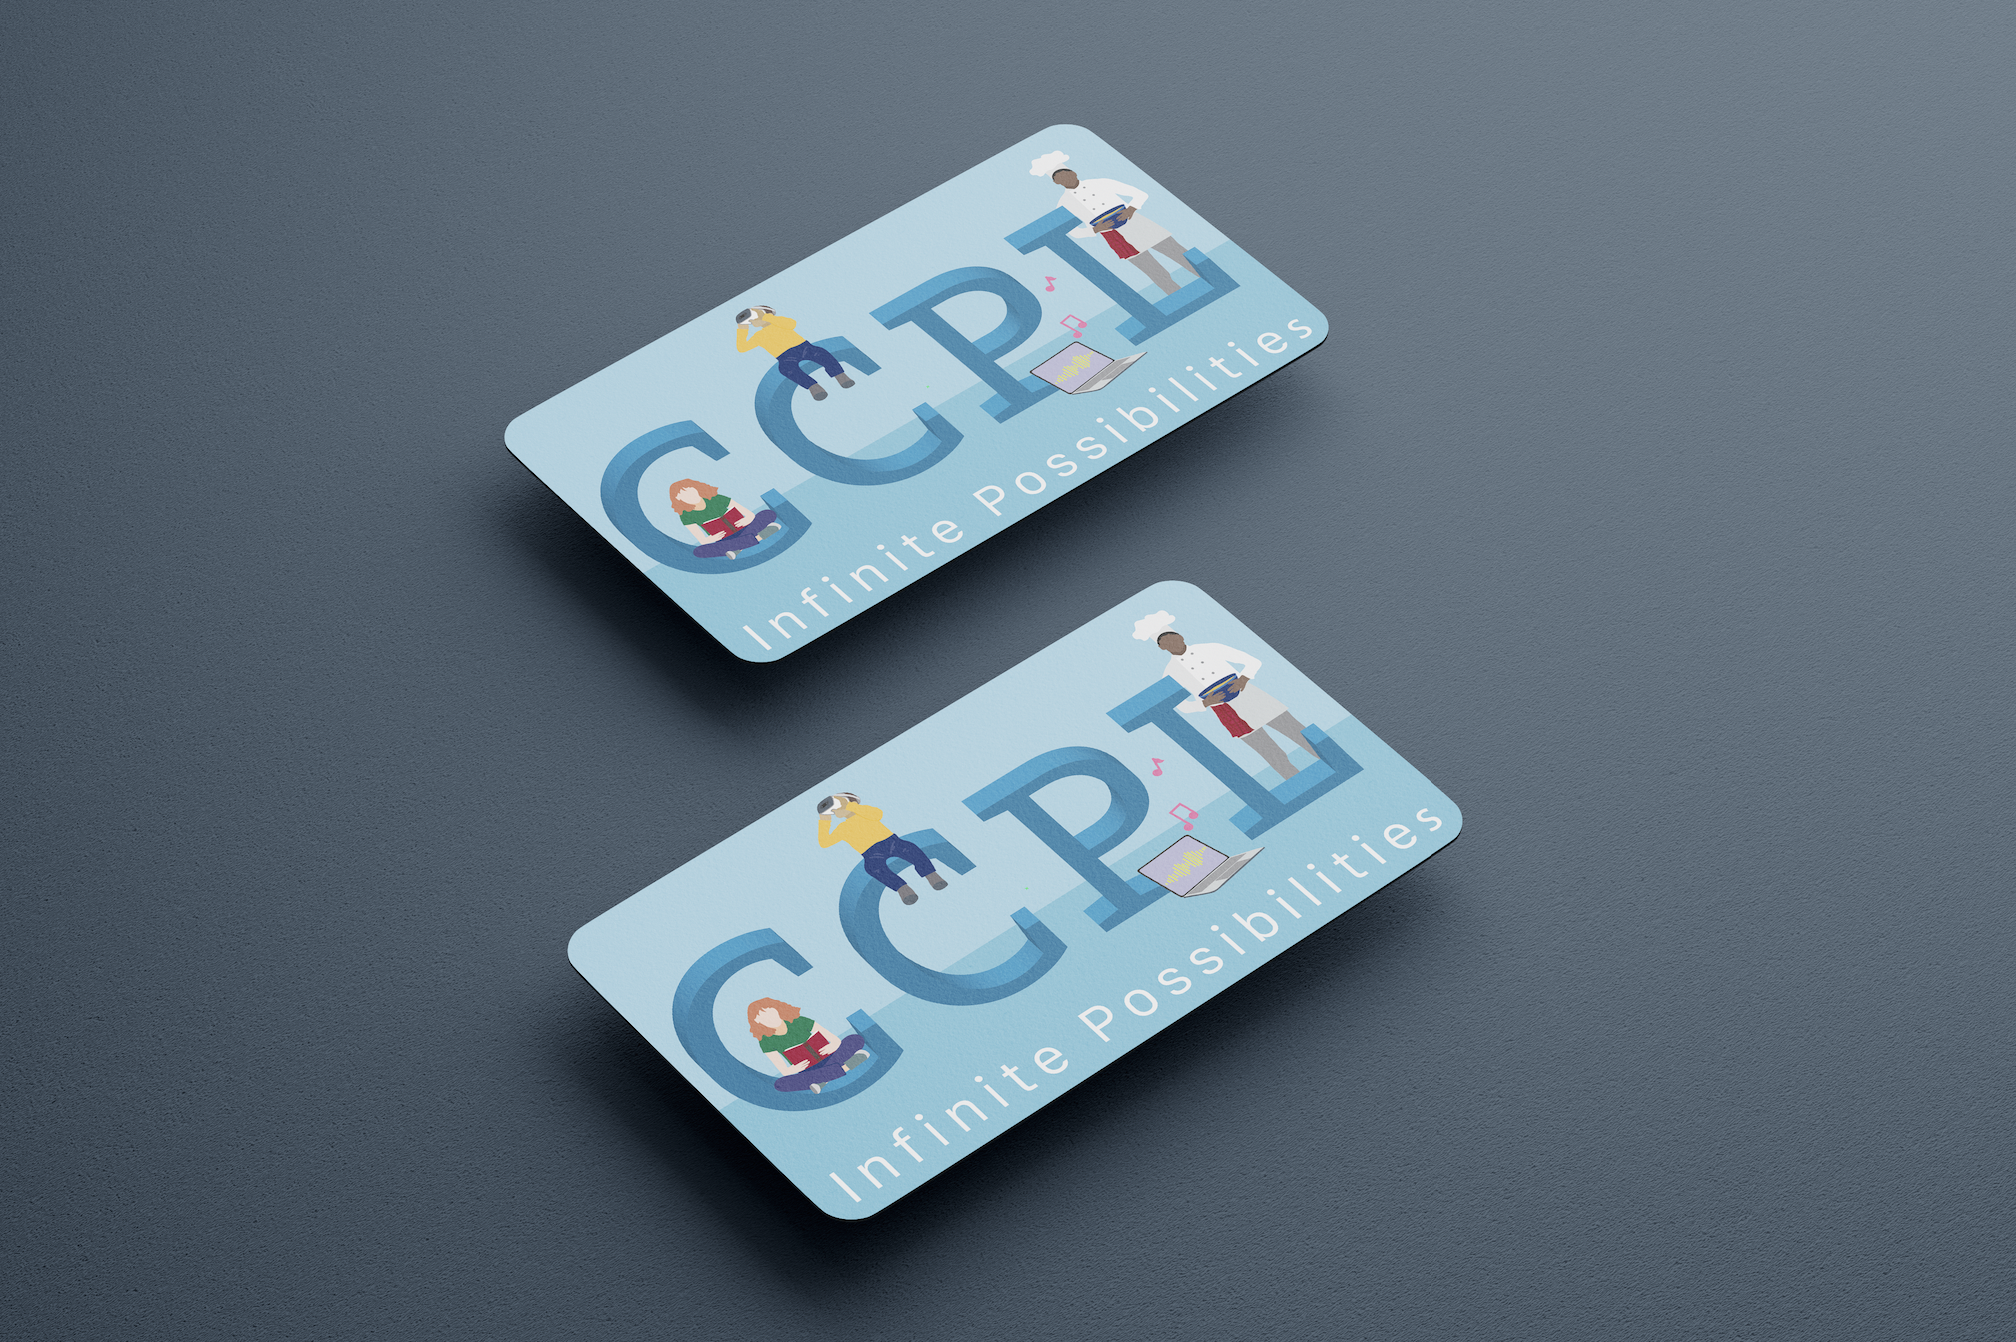 CCPL Library Card Design Contest​